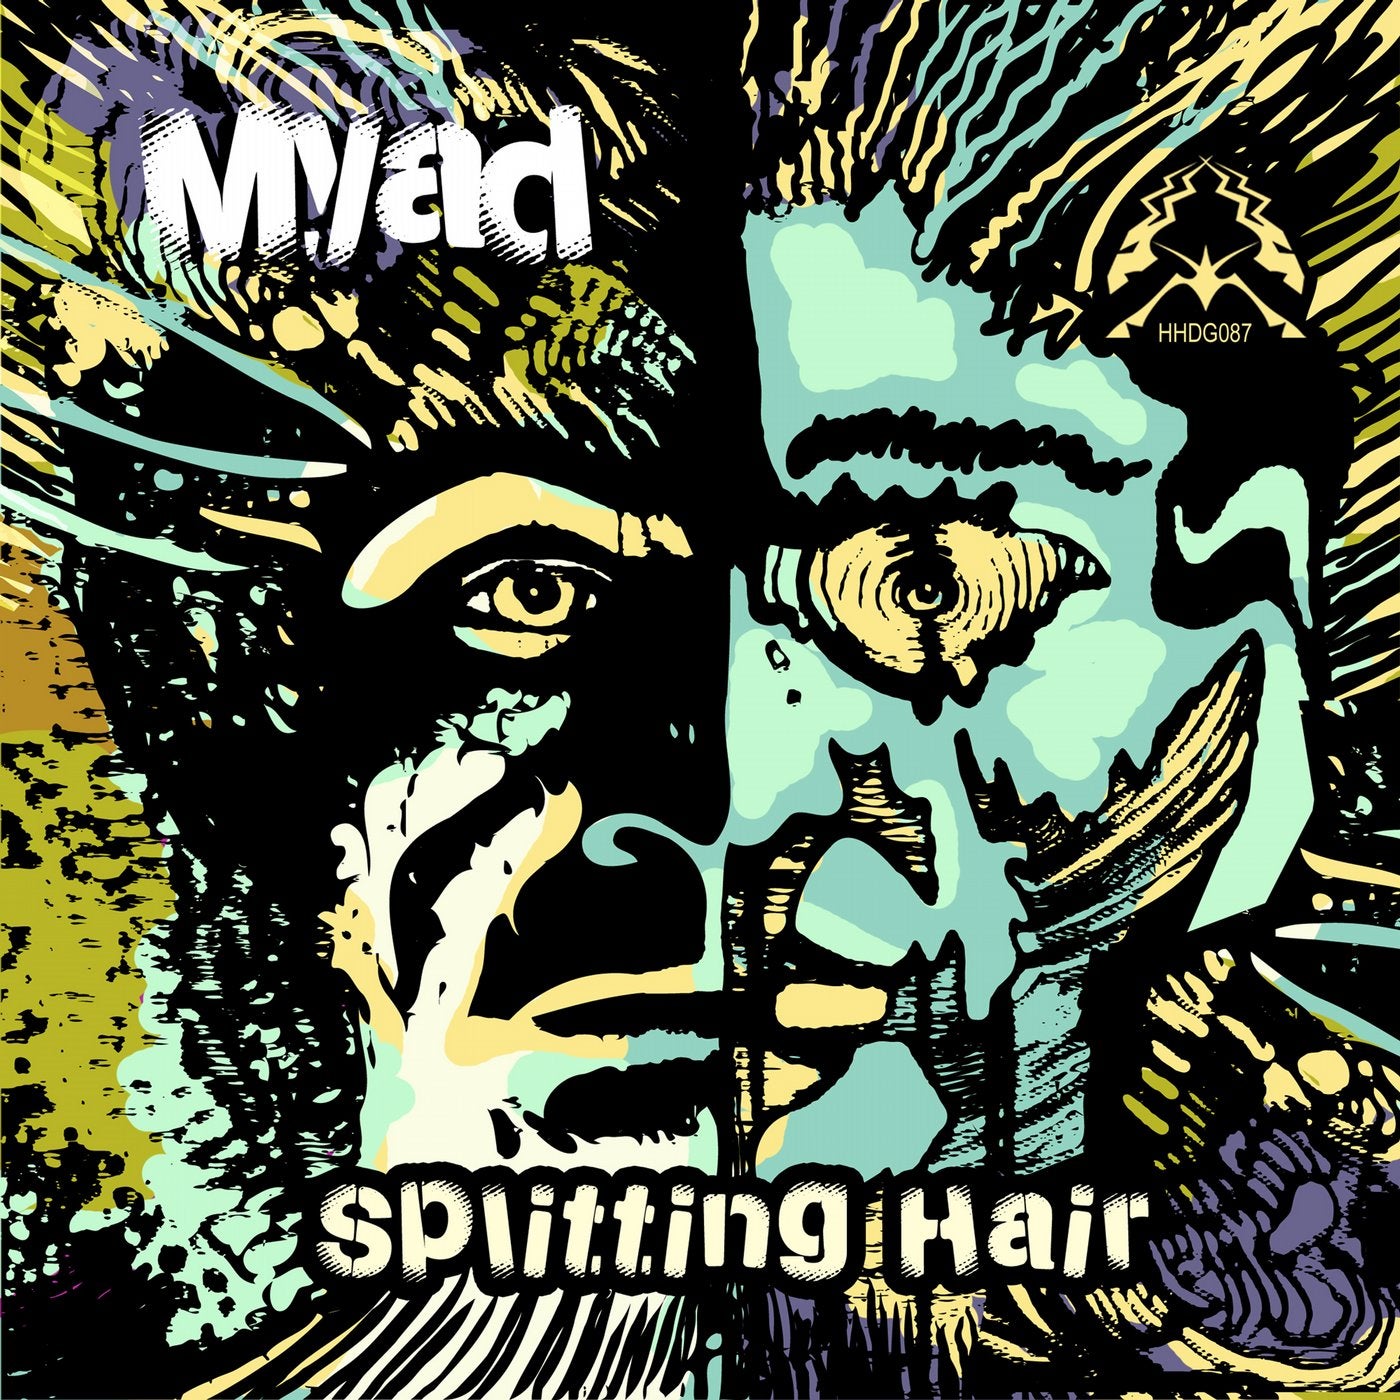 Myad "Splitting Hair"